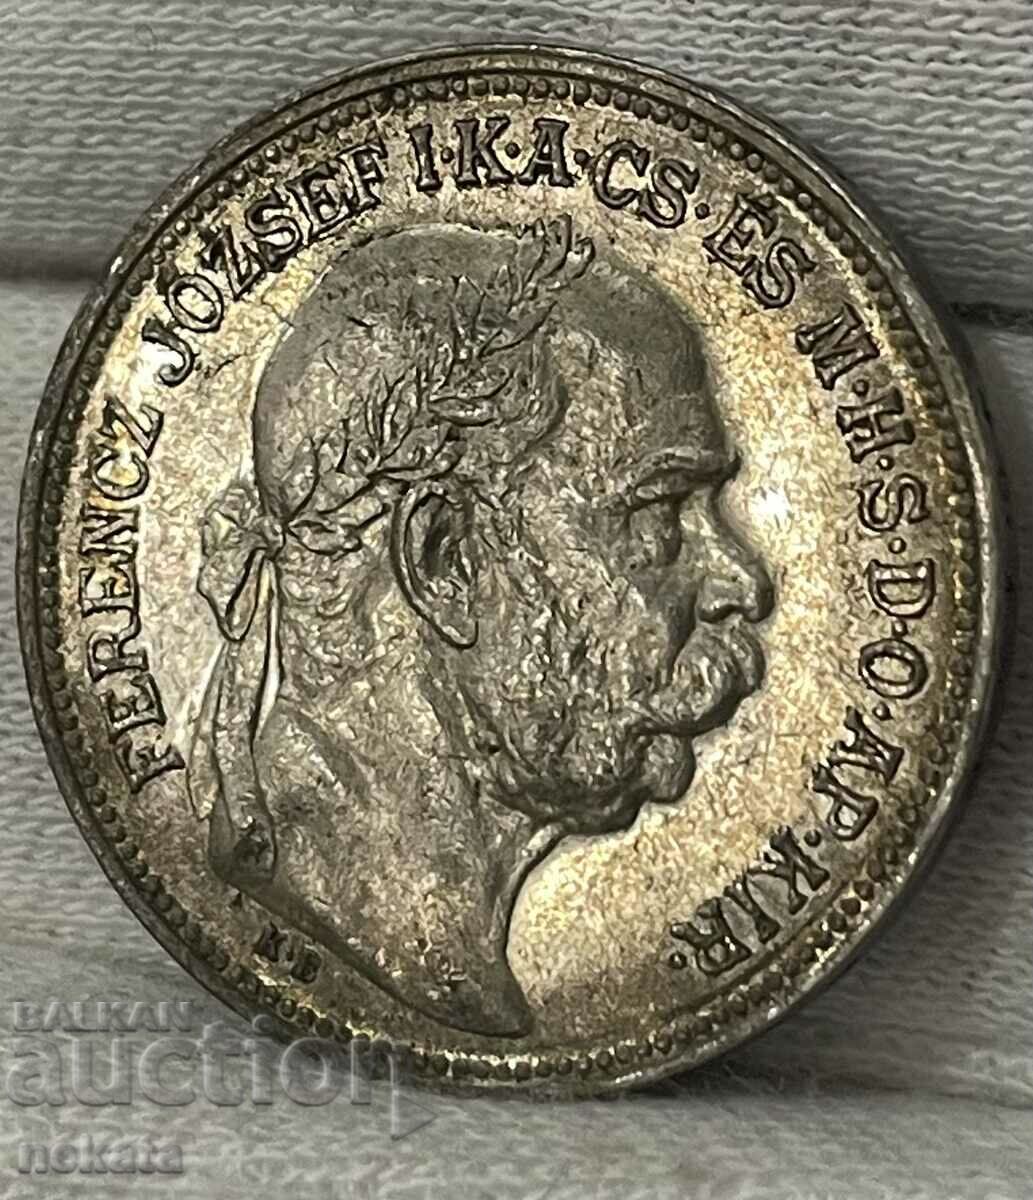 2 Krones/Korns 1912 Hungary, Silver